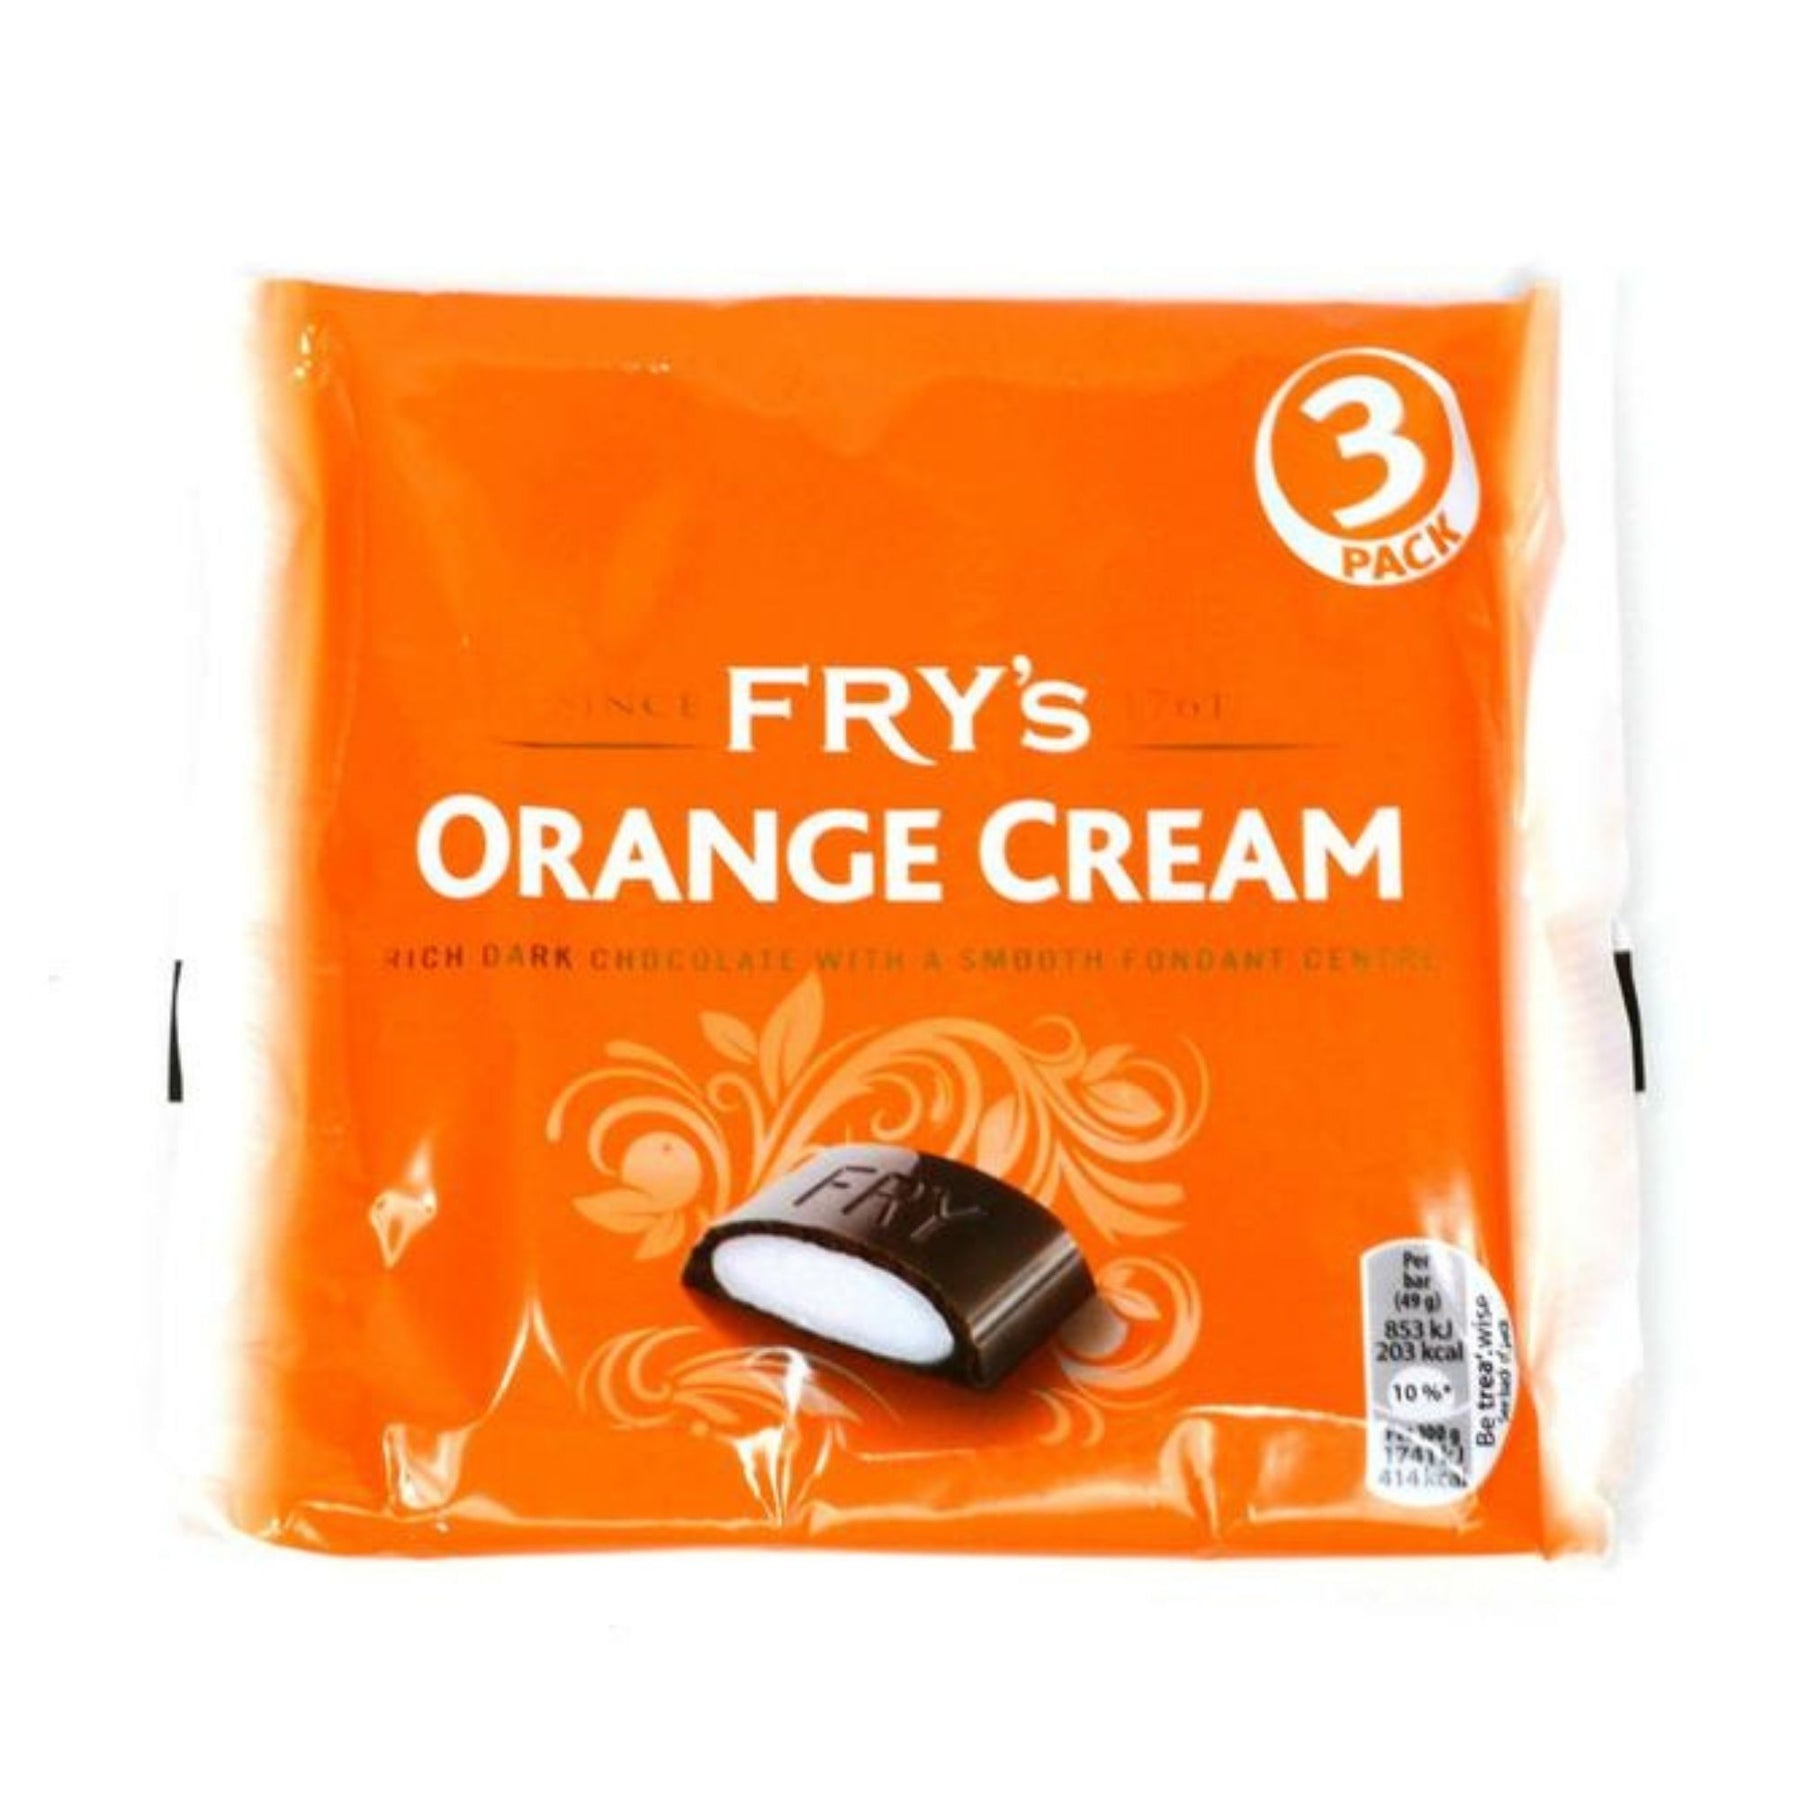 Fry's Orange Cream Chocolate Bar 3 Pack The Spotty Bag Shop